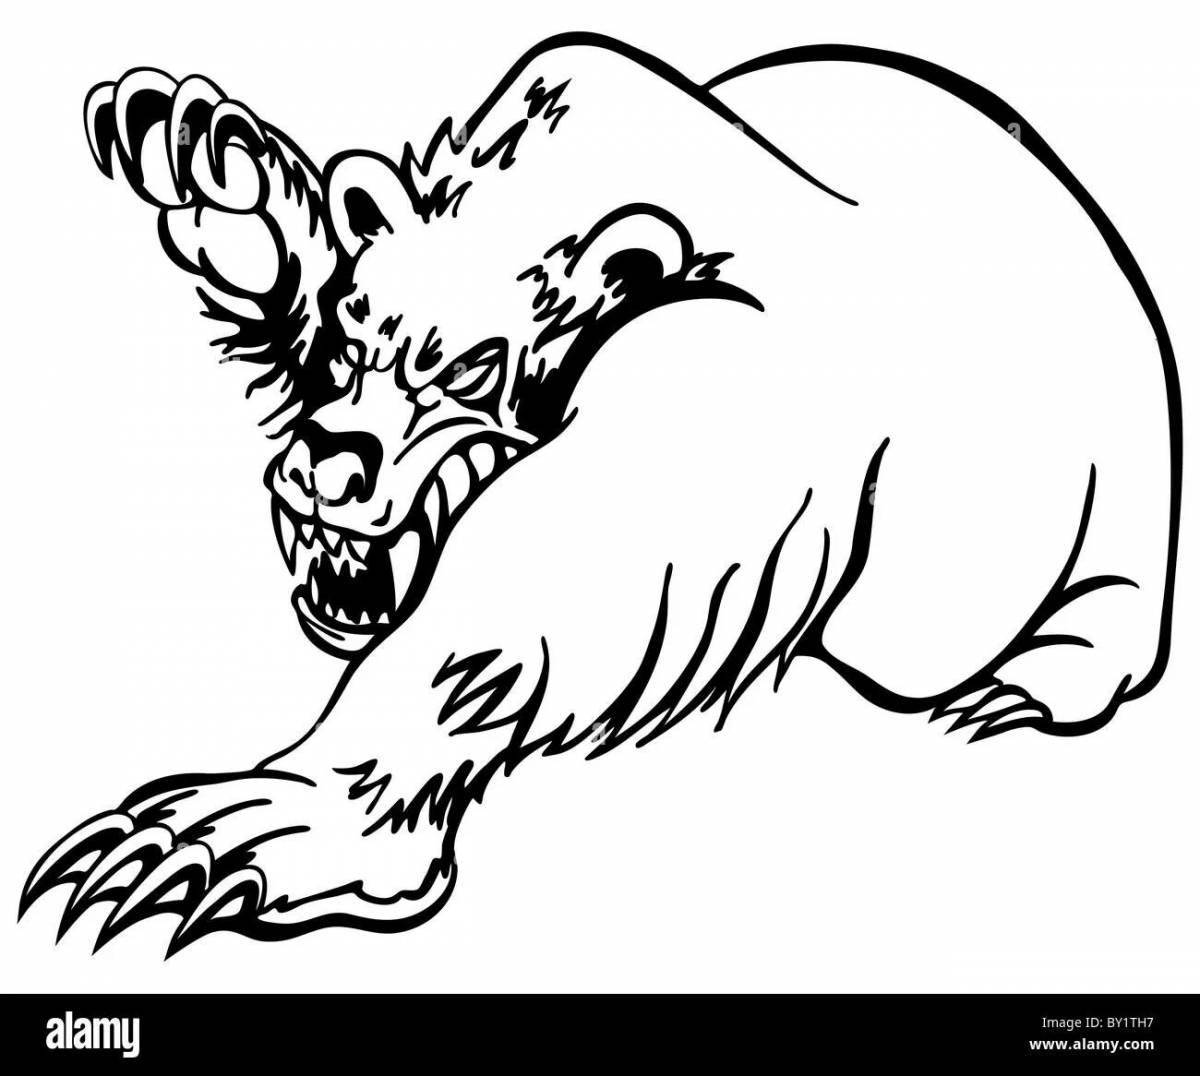 Rampant angry bear coloring page